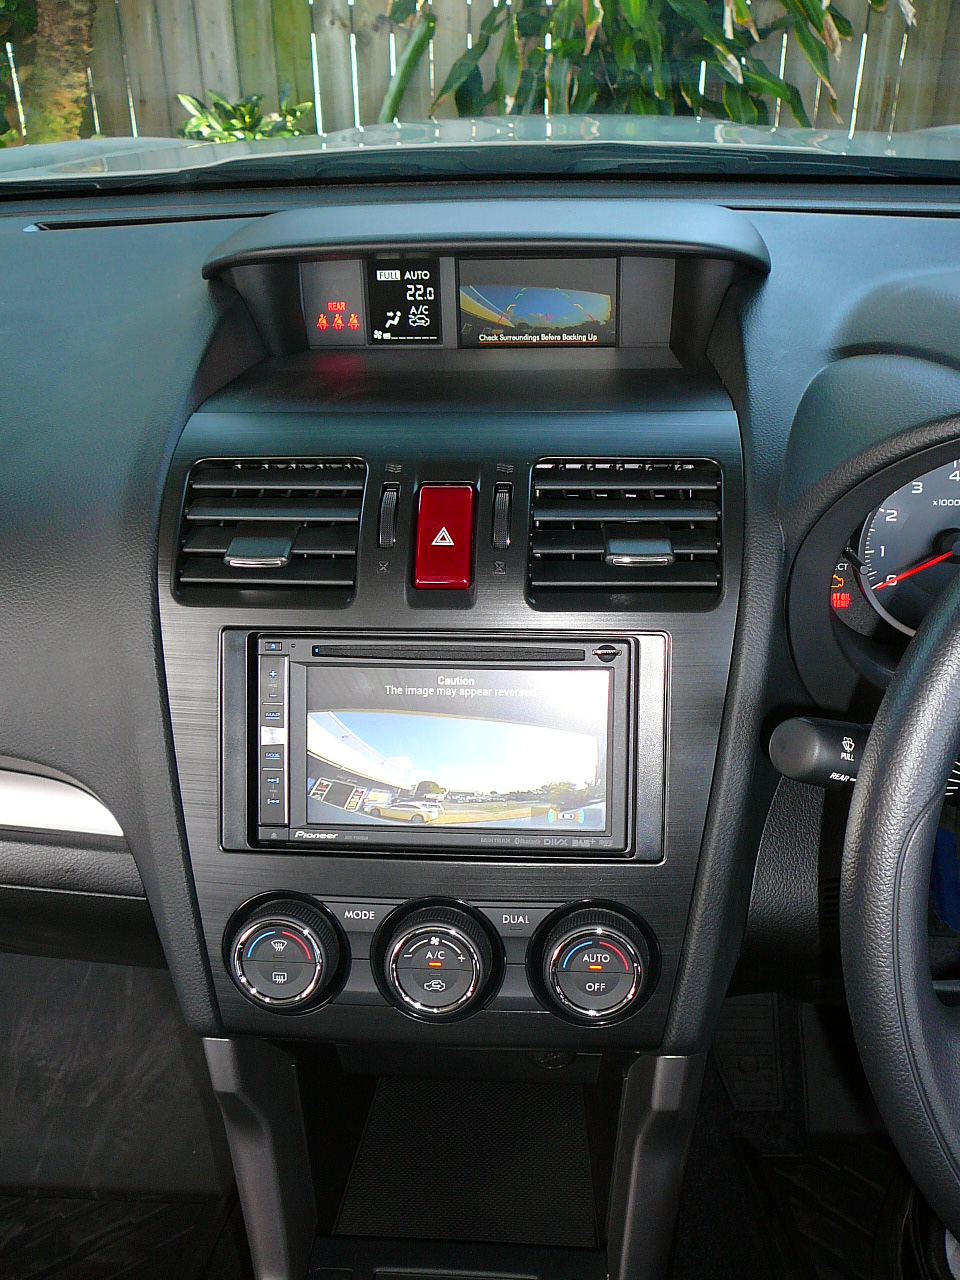 Subaru Forester 2014, Pioneer AVIC-F960DAB GPS Navigation Installation